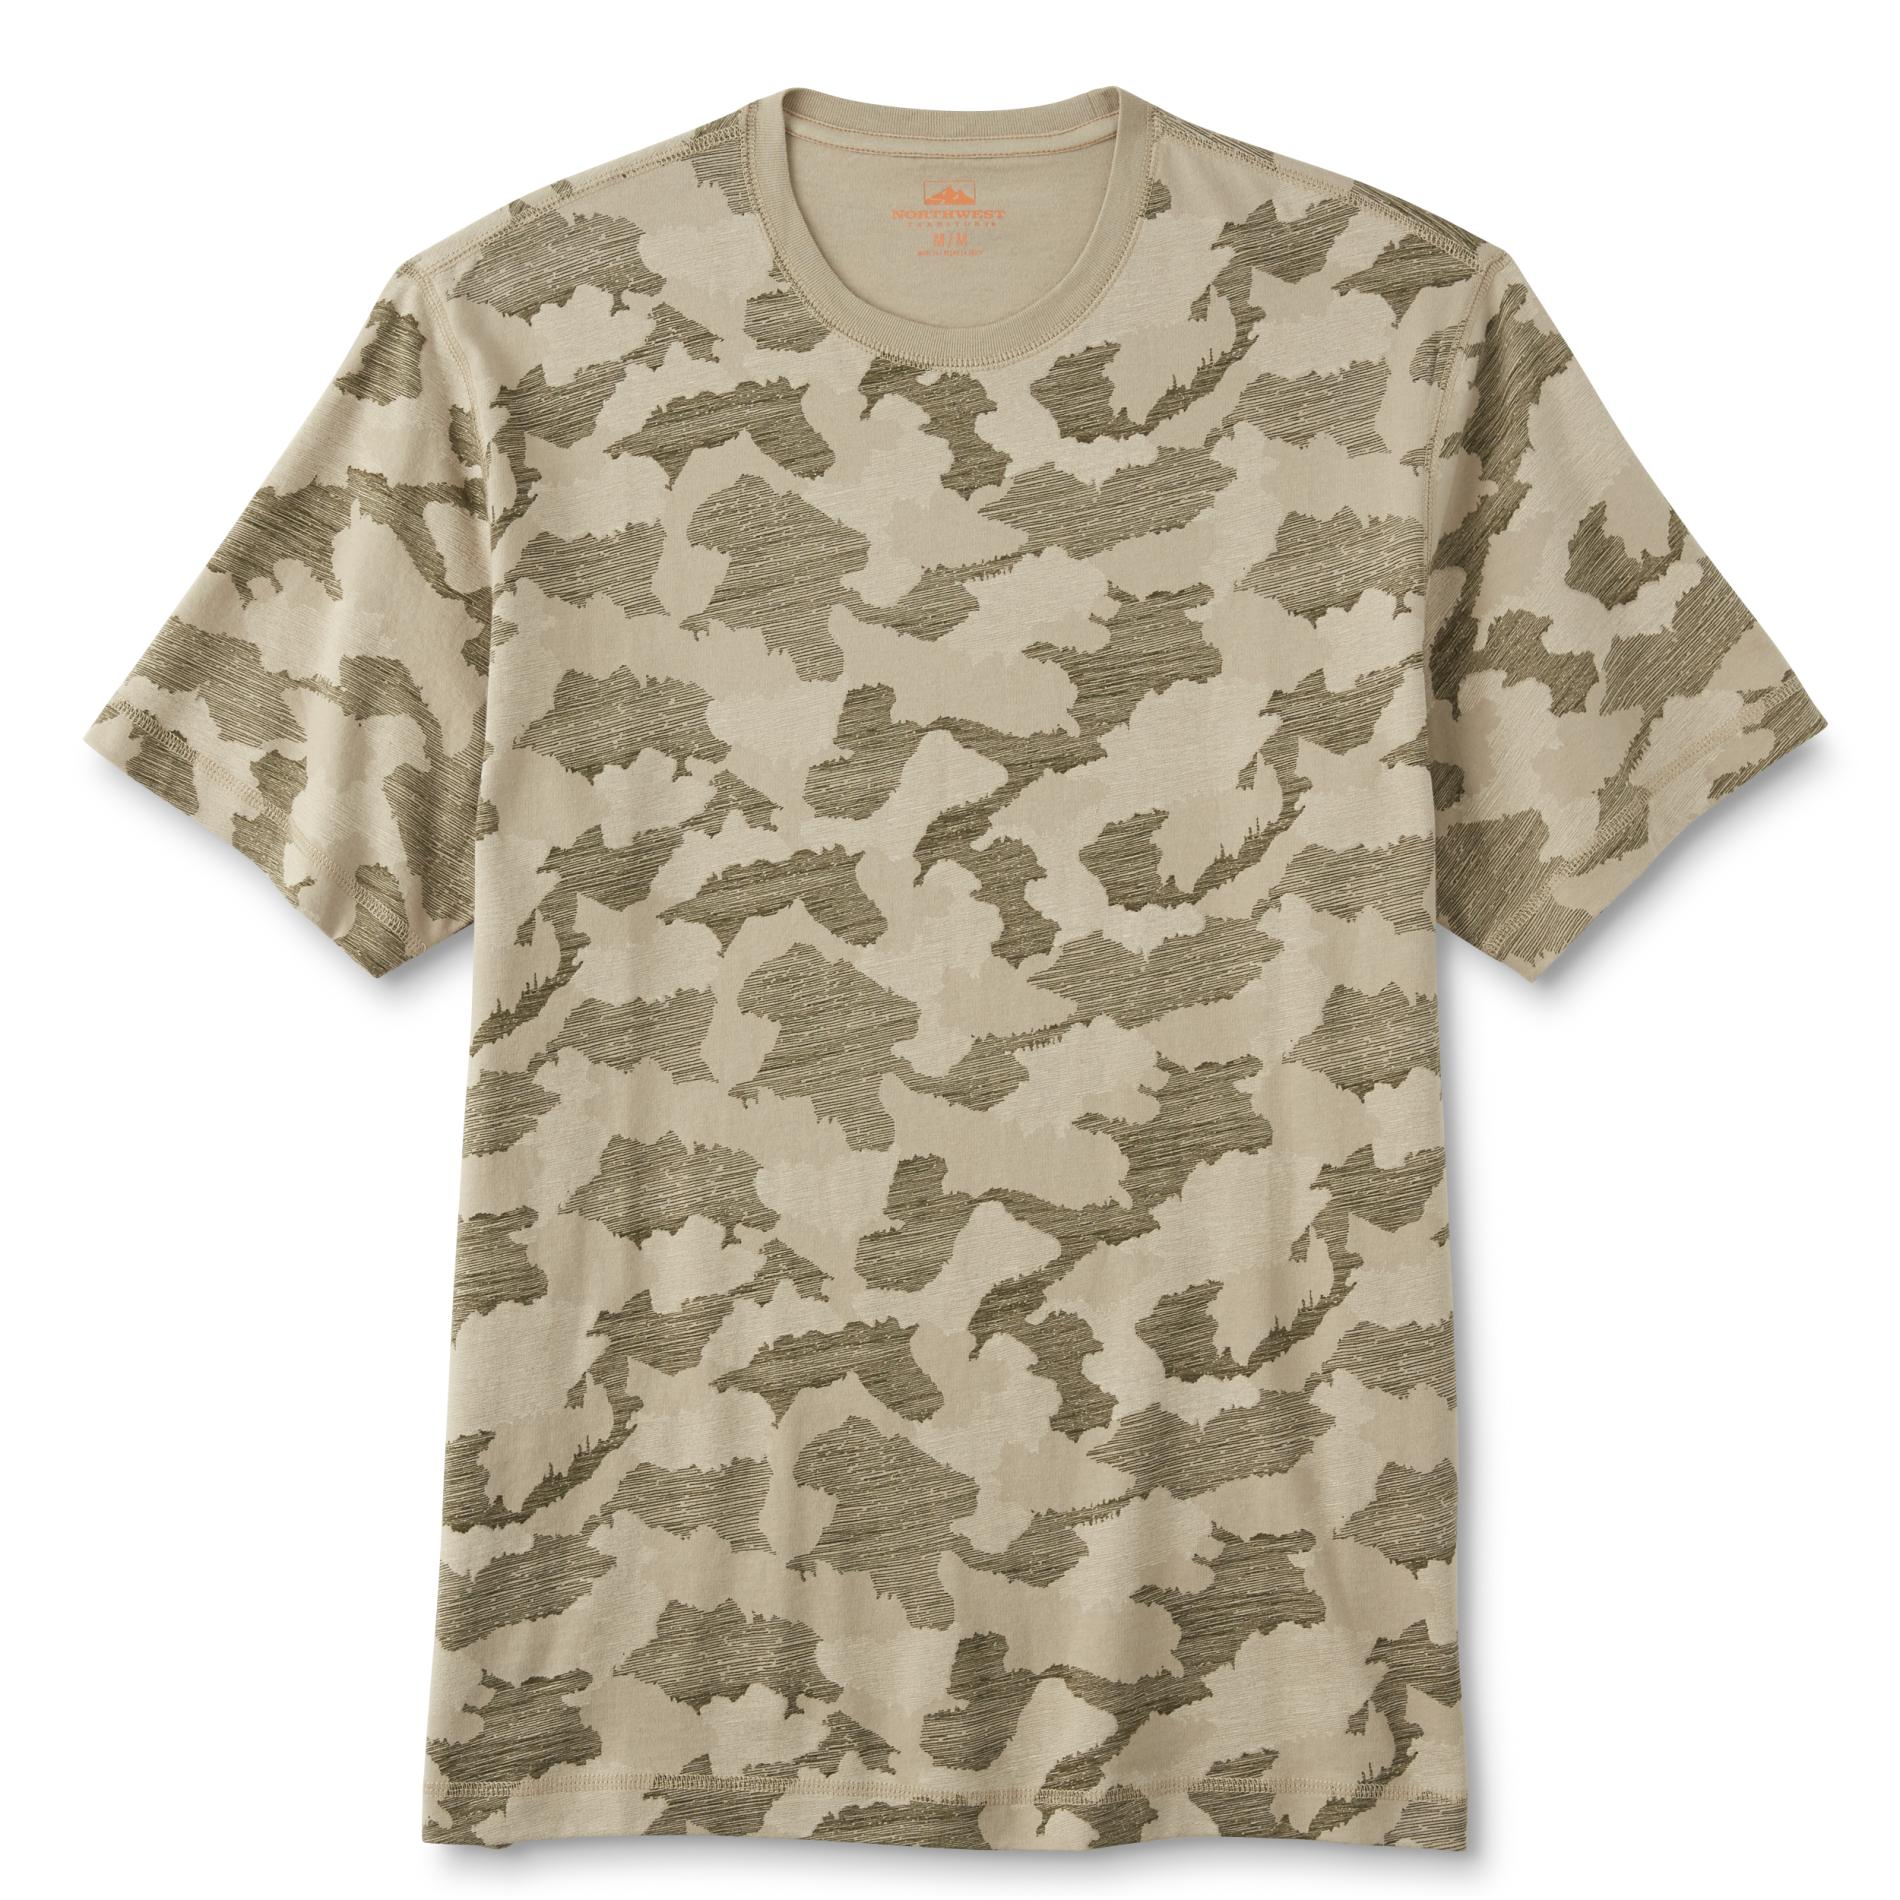 Northwest Territory Men's Big & Tall T-Shirt - Camouflage